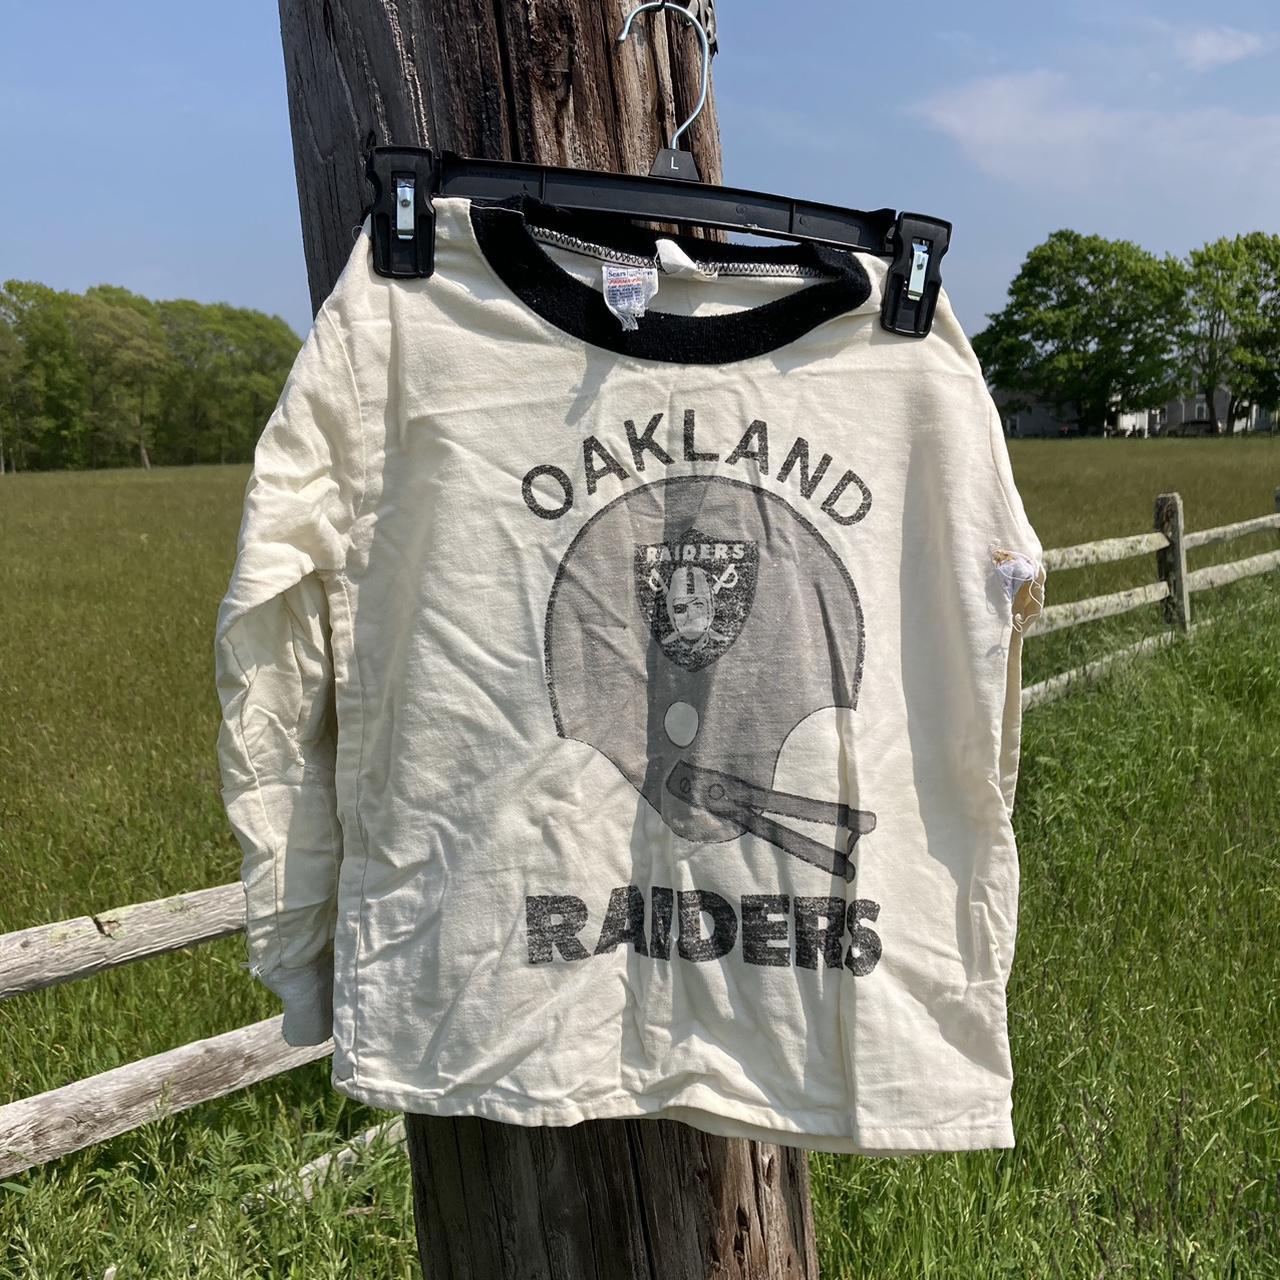 Vintage Raiders Football T-Shirt